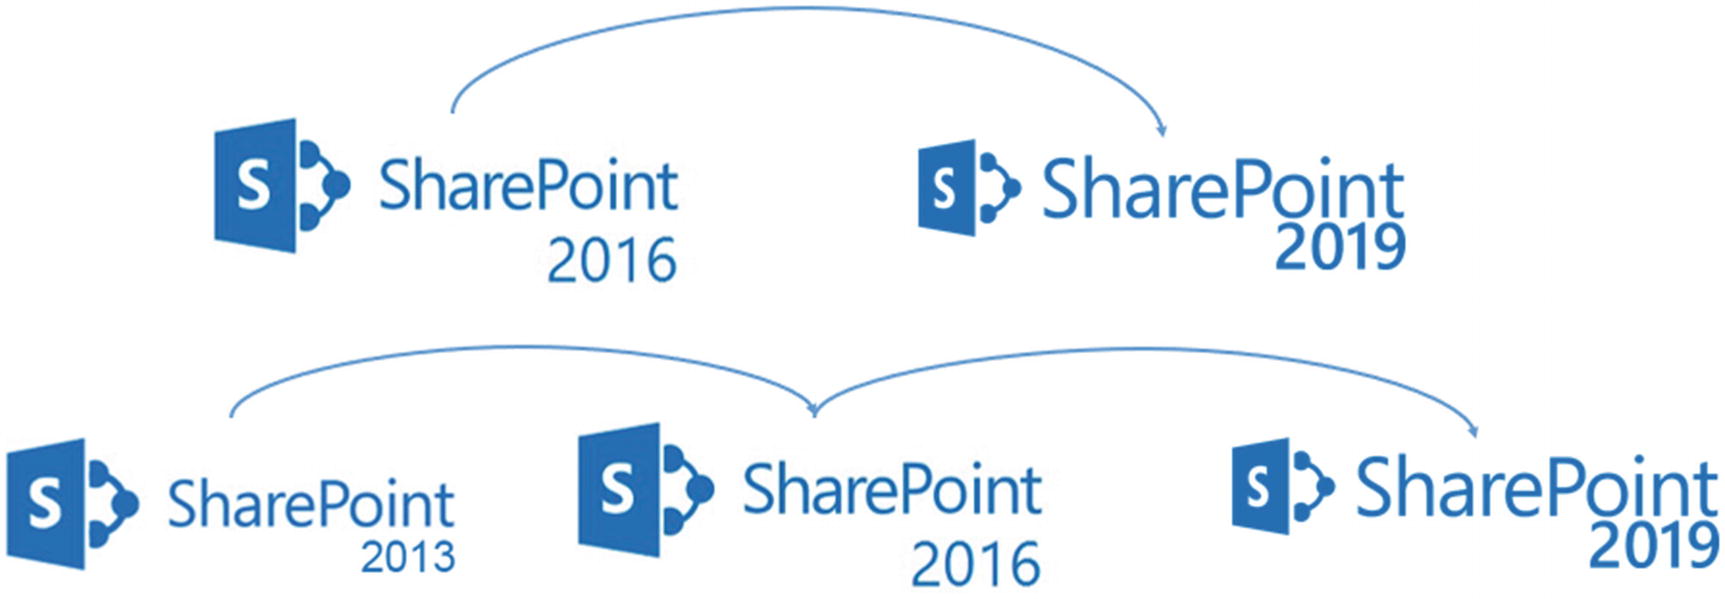 Upgrade sharepoint 2010 to 2013